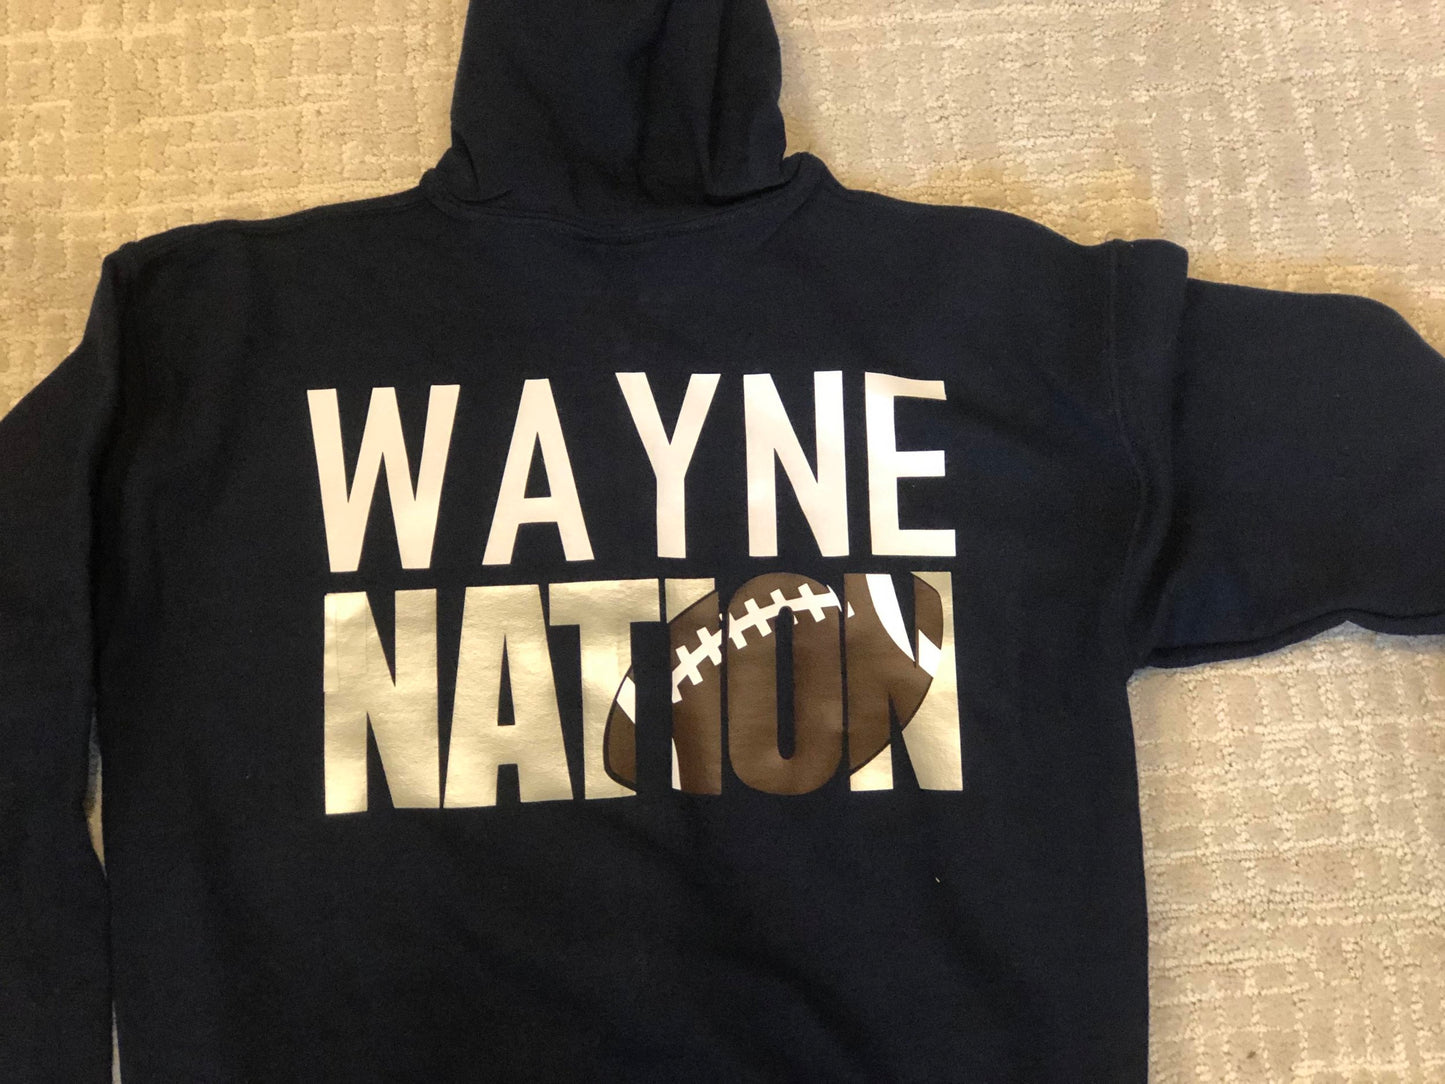 Nation Sweatshirt